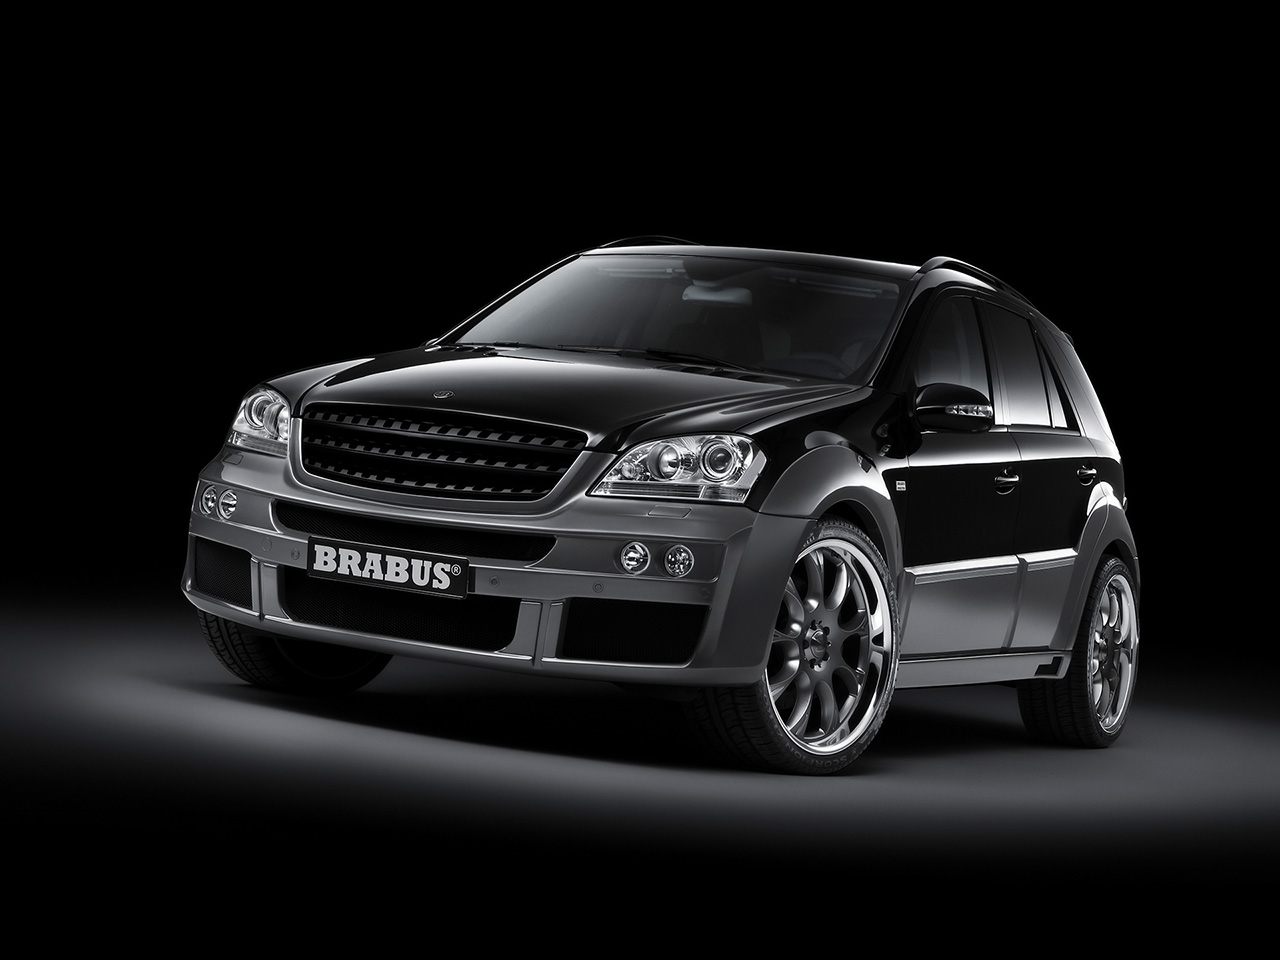 14478029582007-Brabus-Widestar-based-on-Mercedes-Benz-ML-63-Front-And-Side-Tilt-1280x960